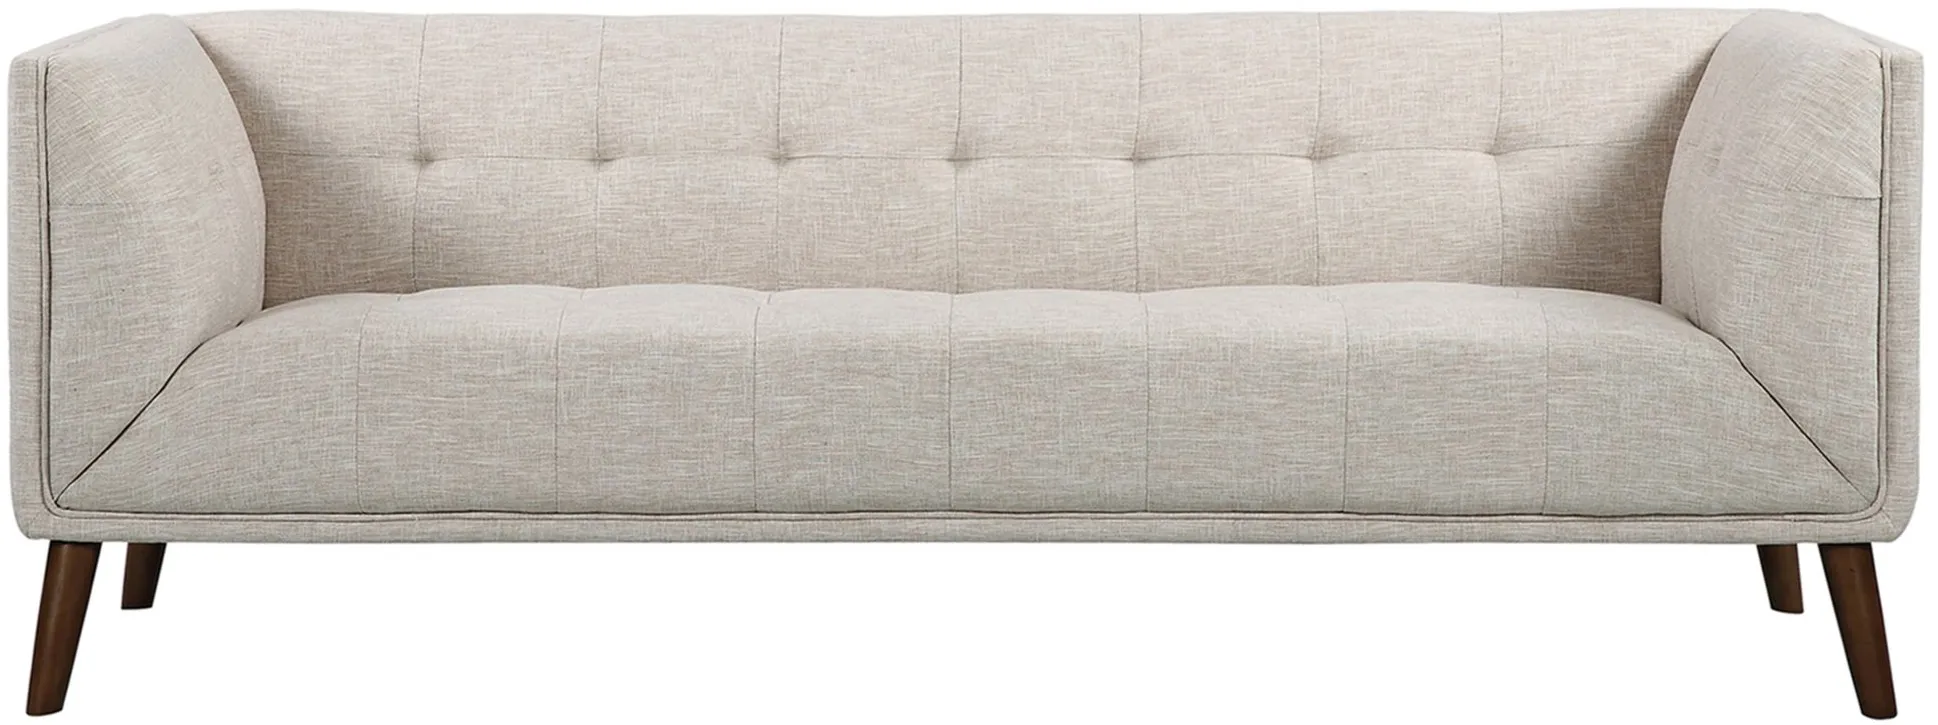 Hudson Sofa in Beige by Armen Living